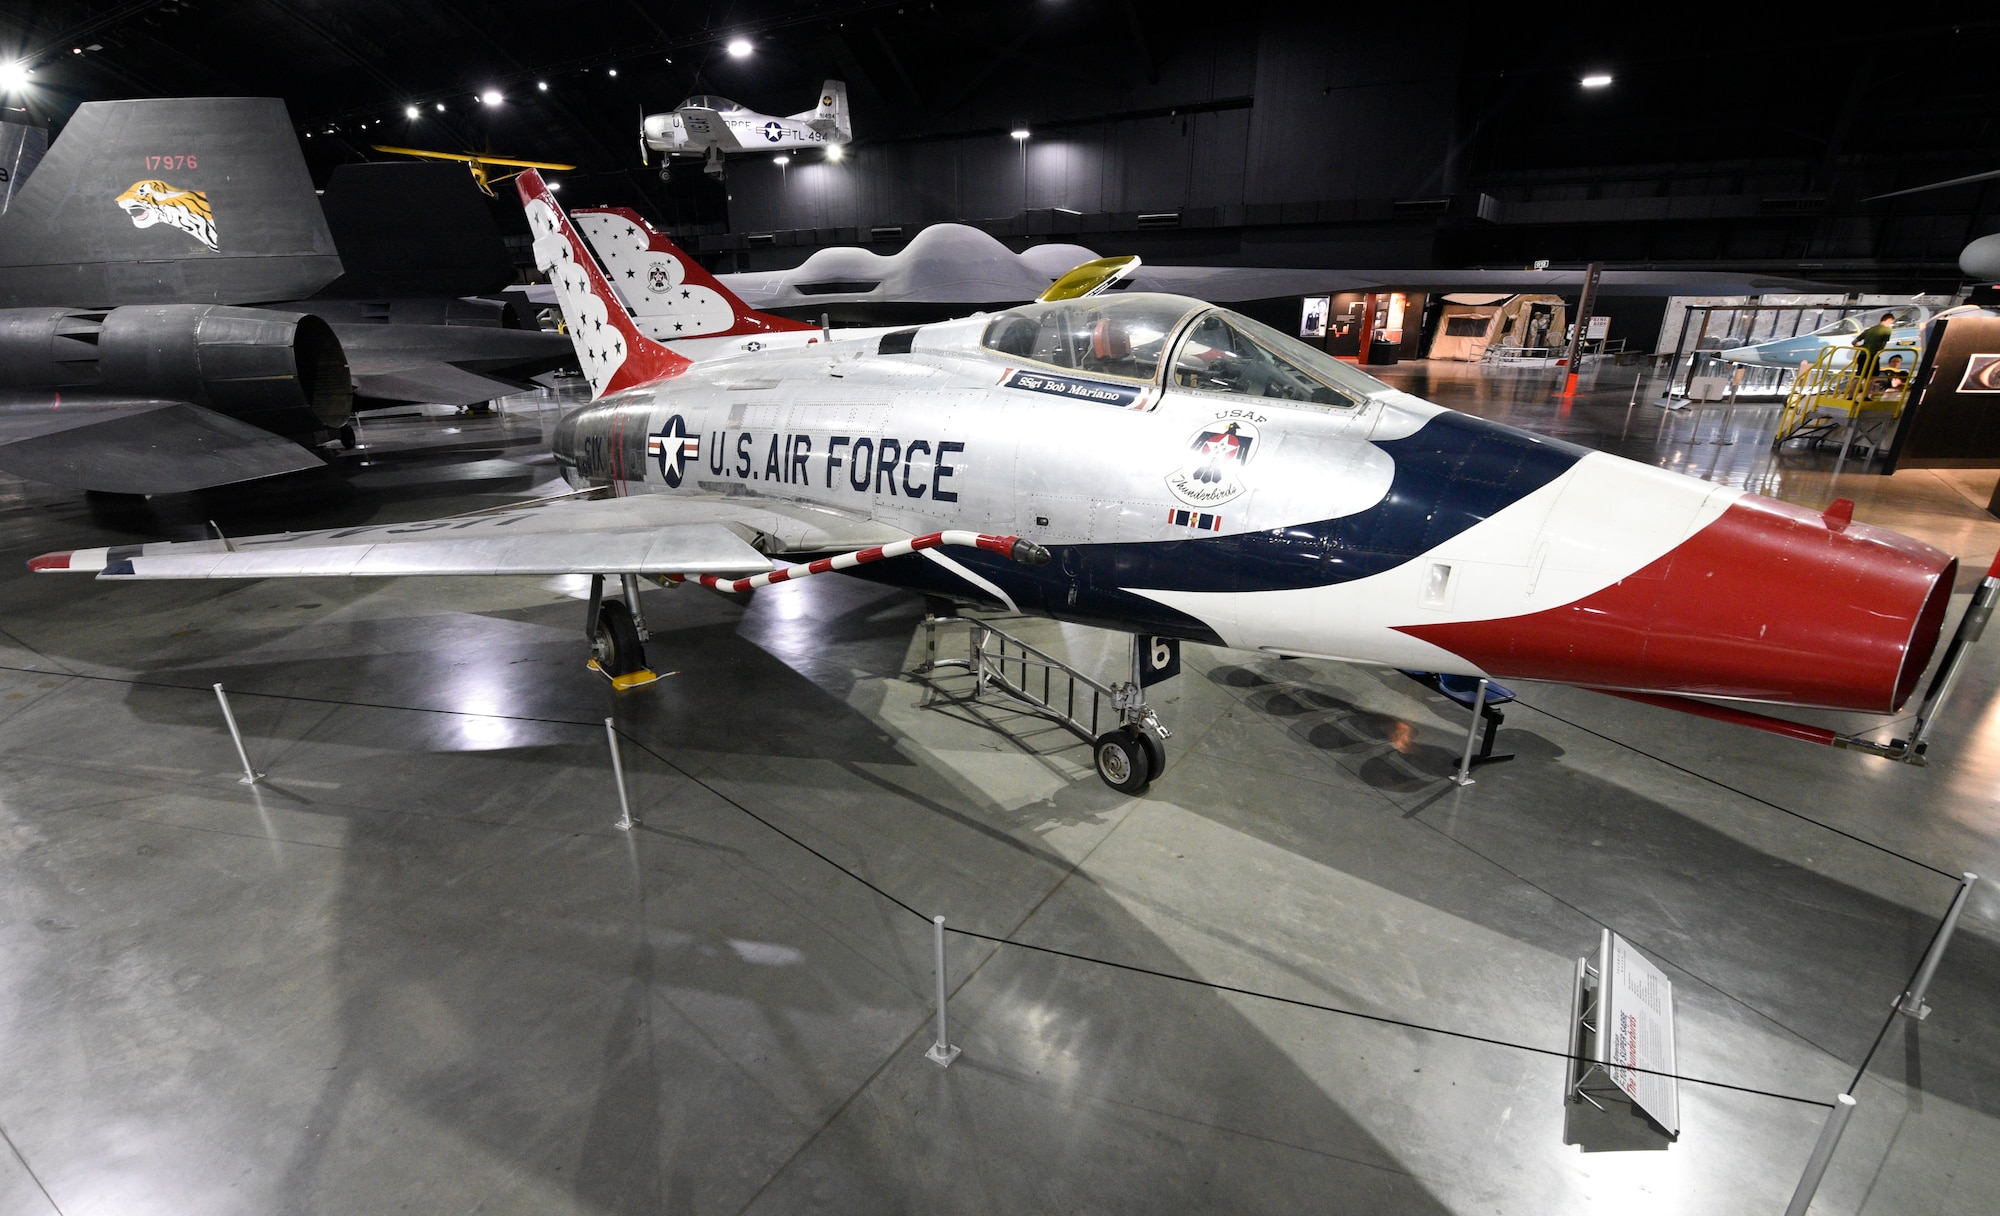 North American F-100 Super Sabre Wallpapers